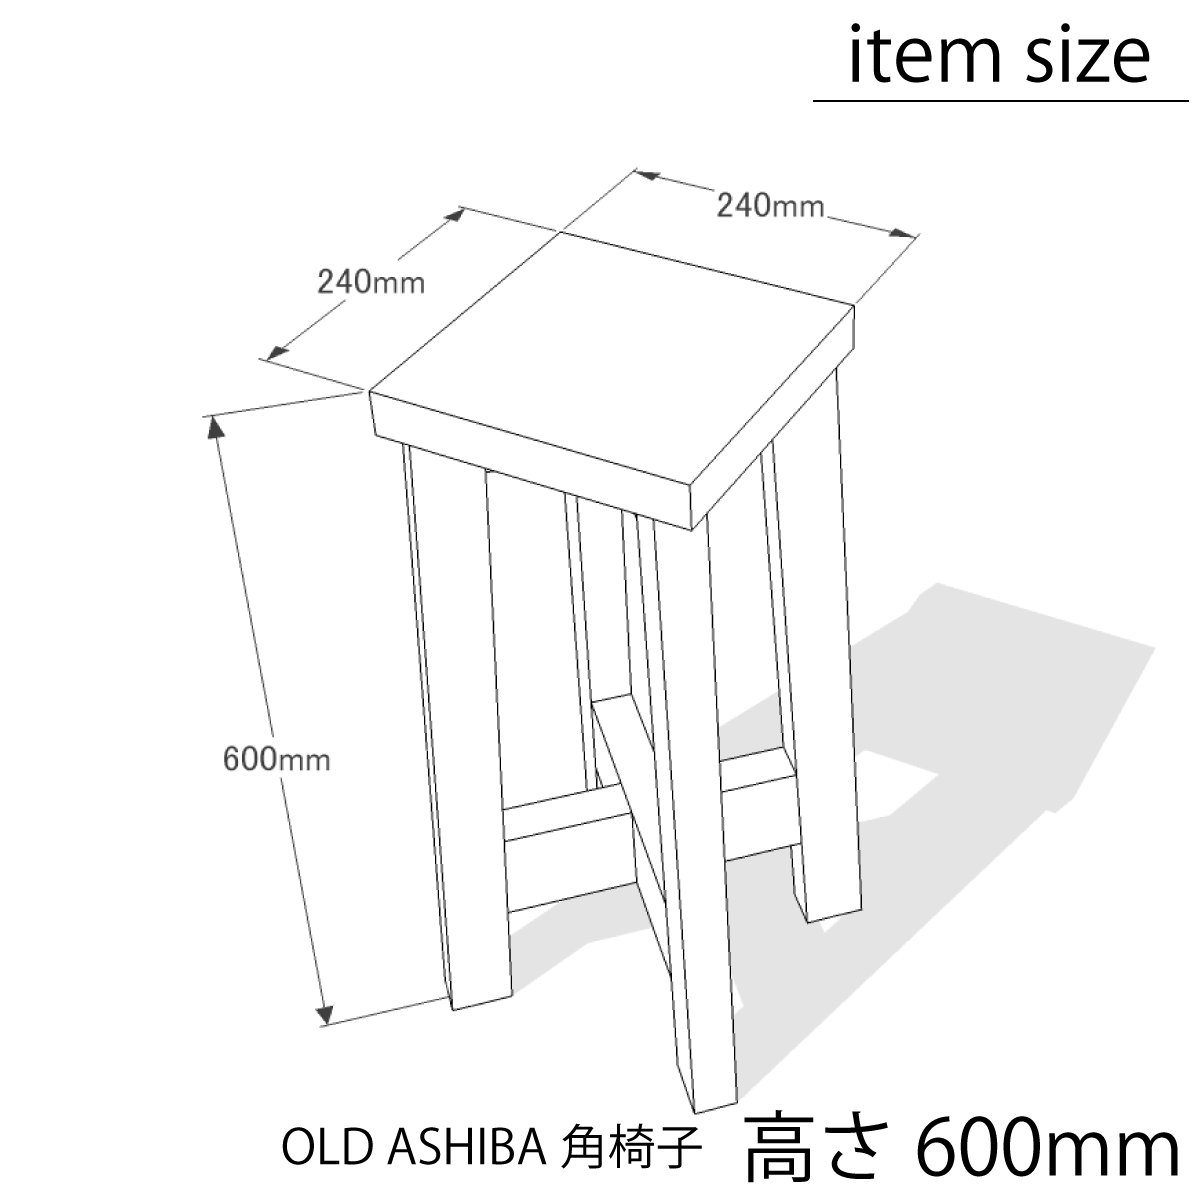 OLD ASHIBA（足場板古材） 角椅子（イス） 高さ600mm [受注生産]画像